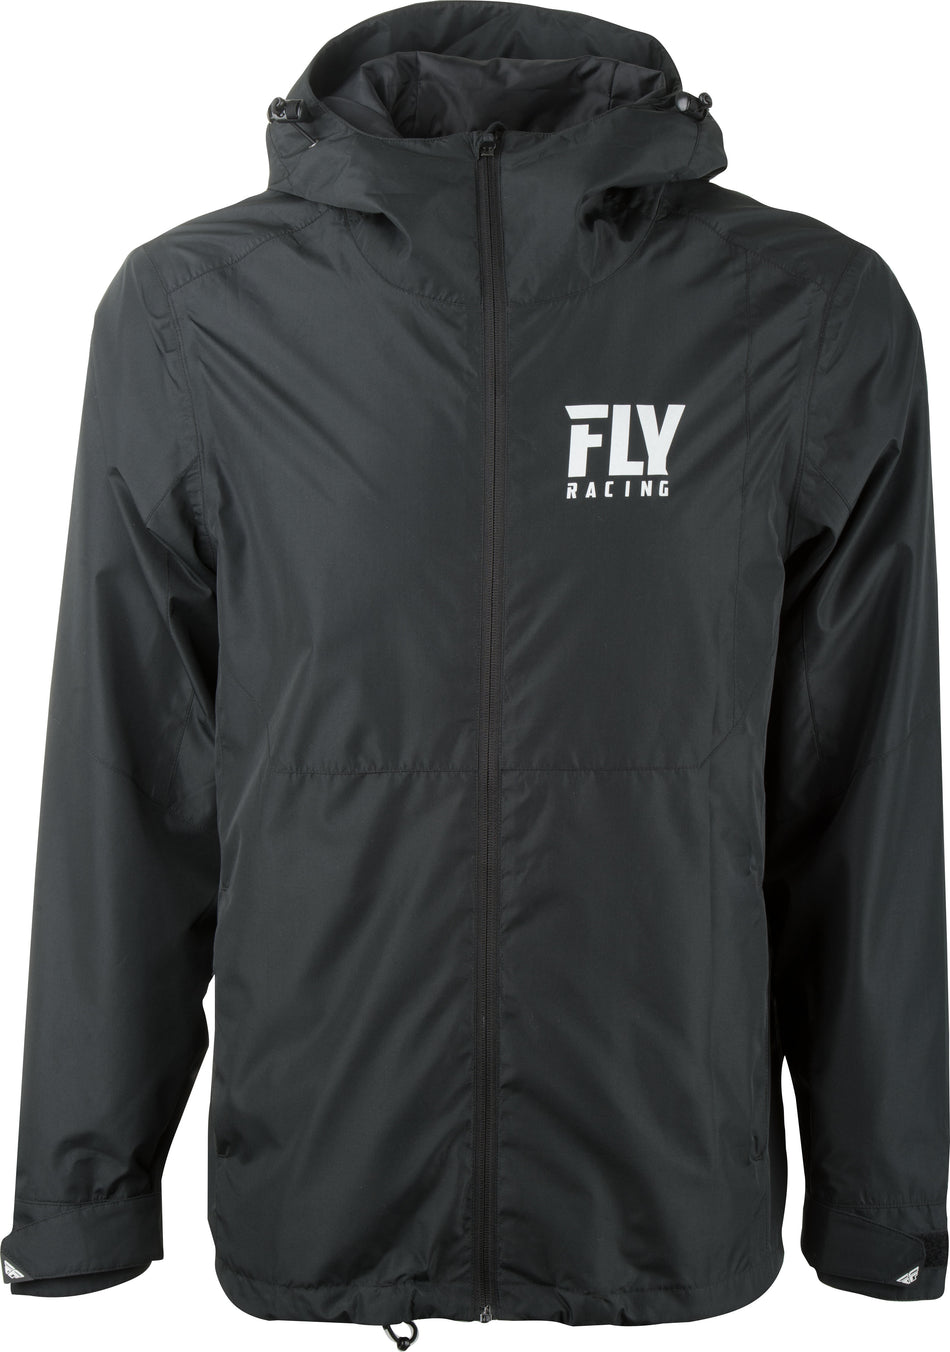 FLY RACING Fly Pit Jacket Black 2x Black 2x 354-63602X